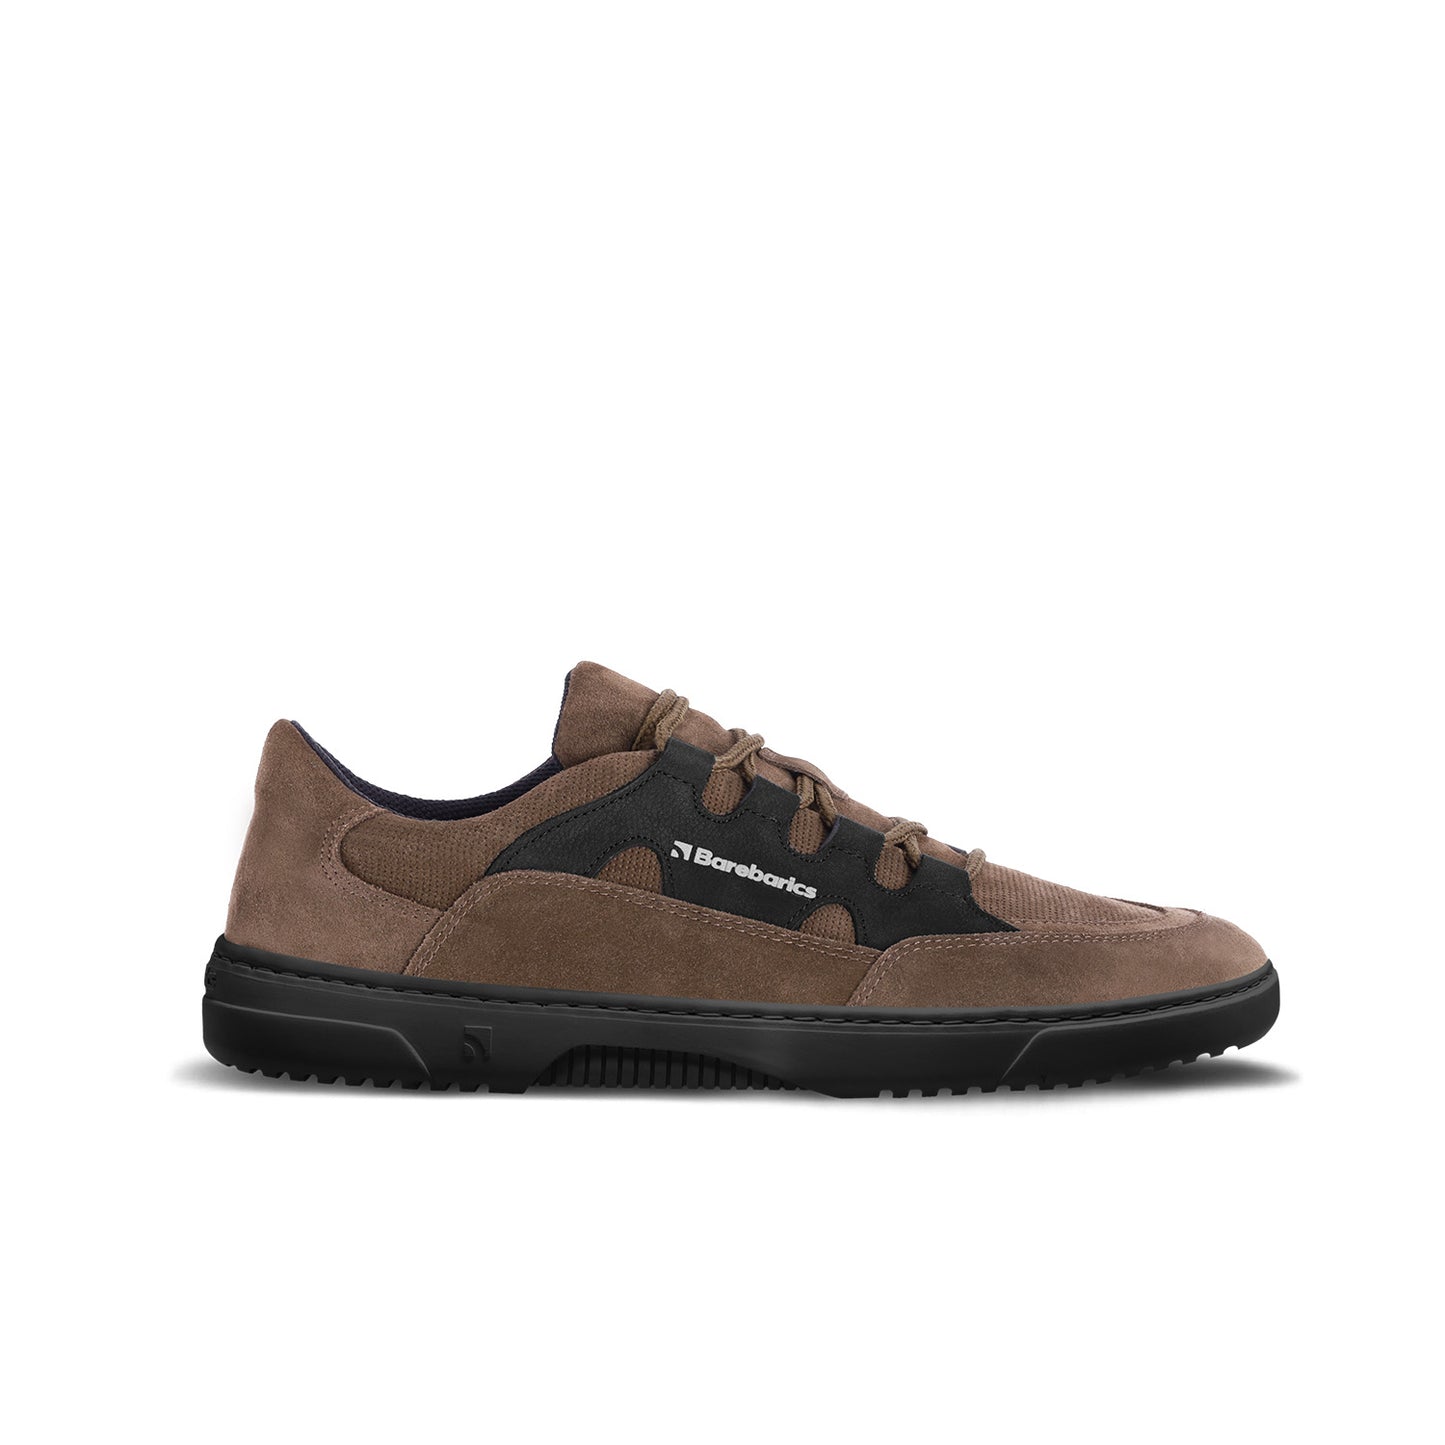 Barebarics Evo Barefoot Sneakers - Dark Brown & Black